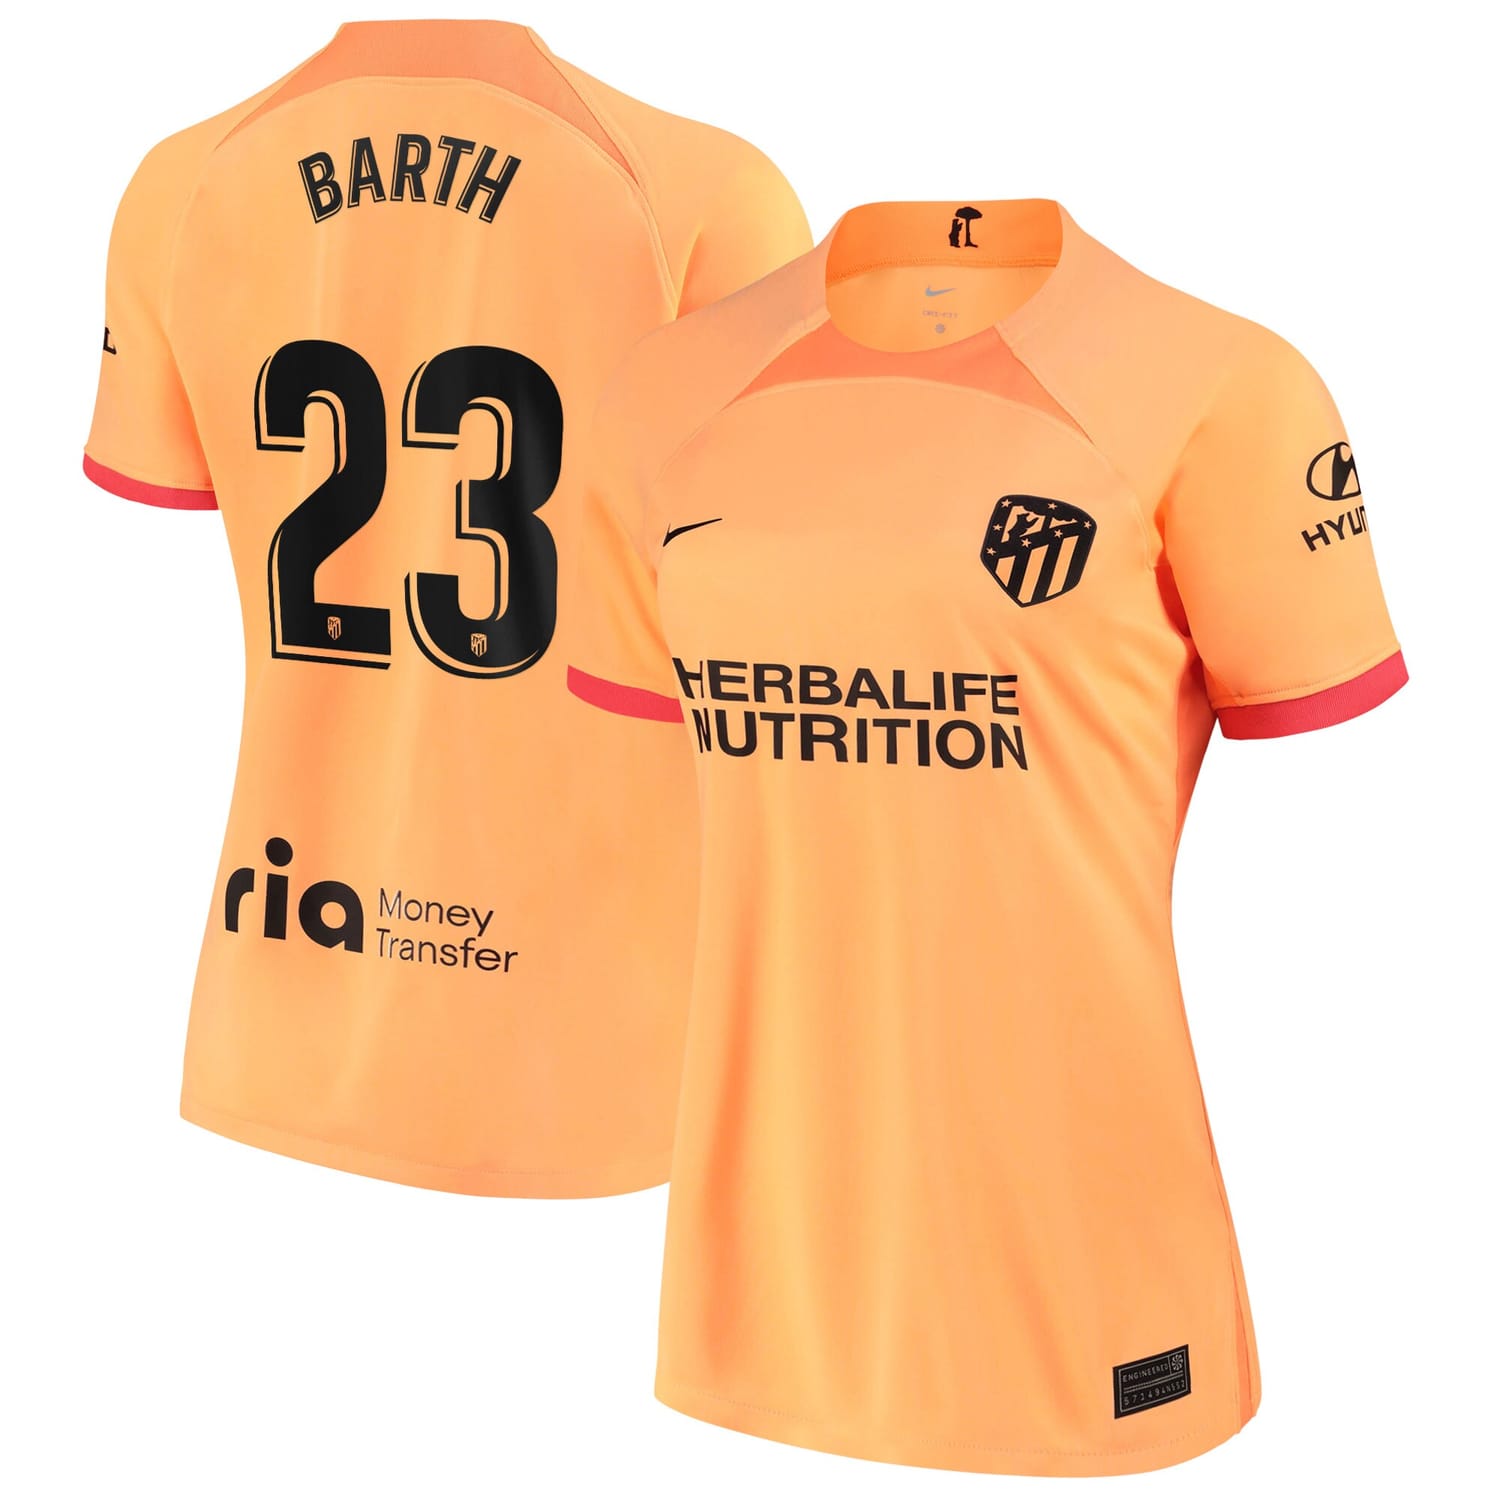 La Liga Atletico de Madrid Third Jersey Shirt 2022-23 player Merle Barth 23 printing for Women